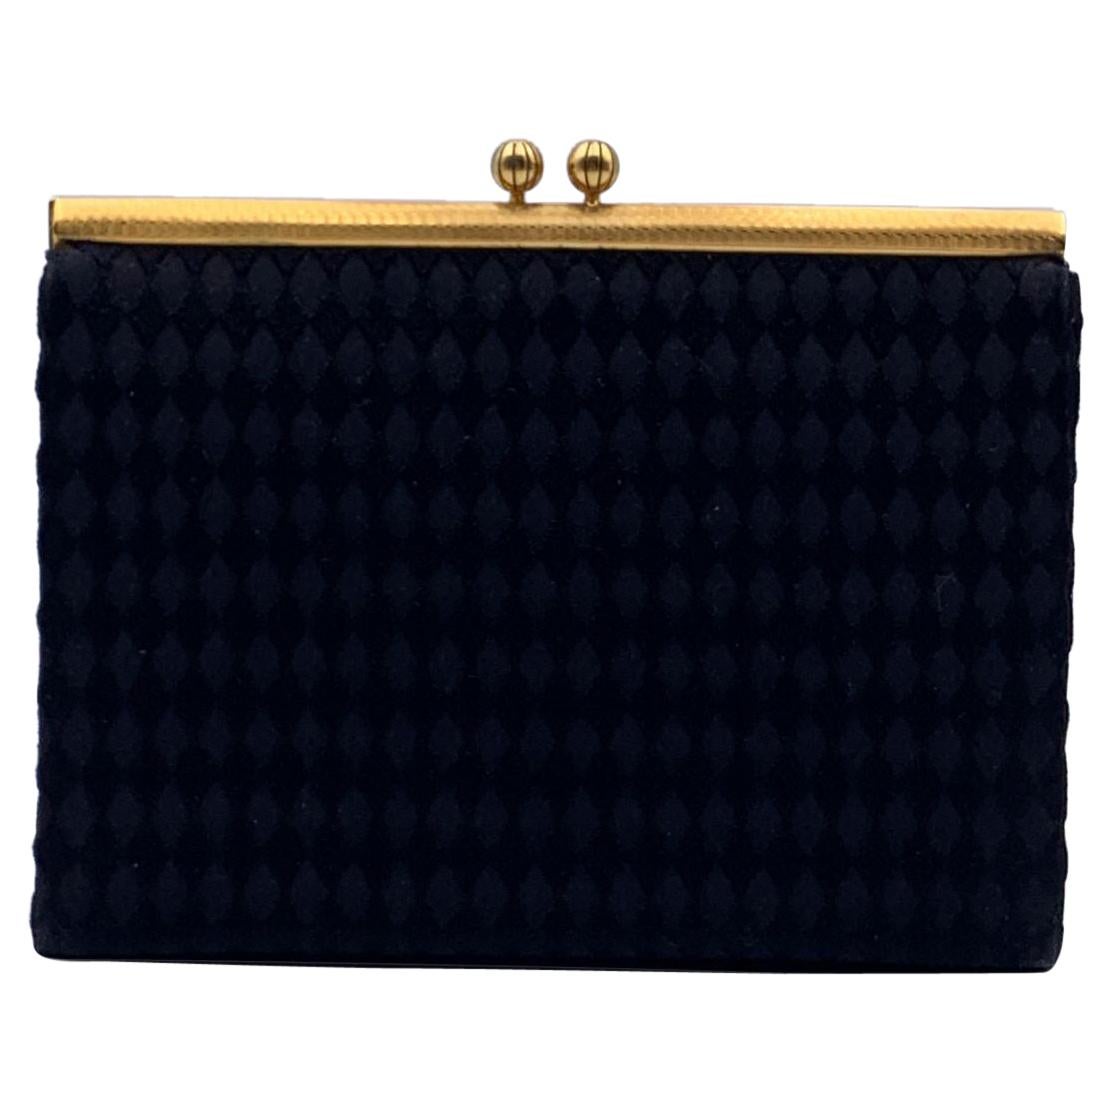 Gucci Rare Vintage Black Satin Evening Bag Clutch Handbag